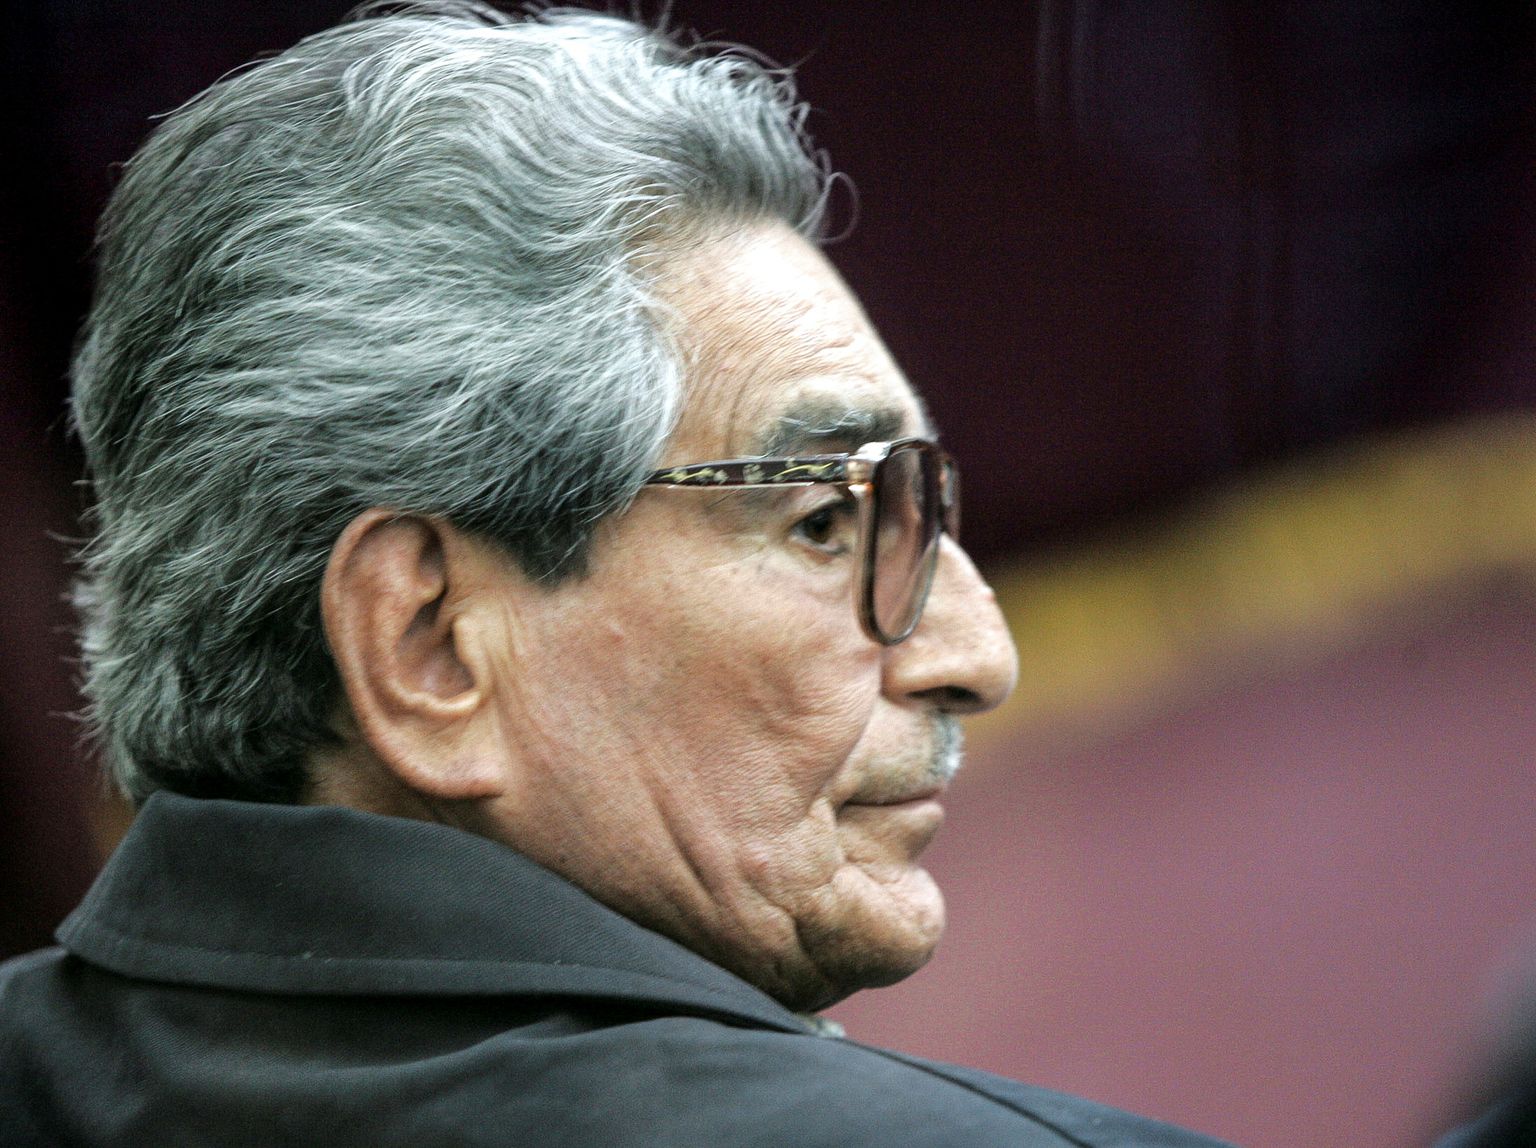 Abimael Guzmán Peruu vanglas 5. november 2004.